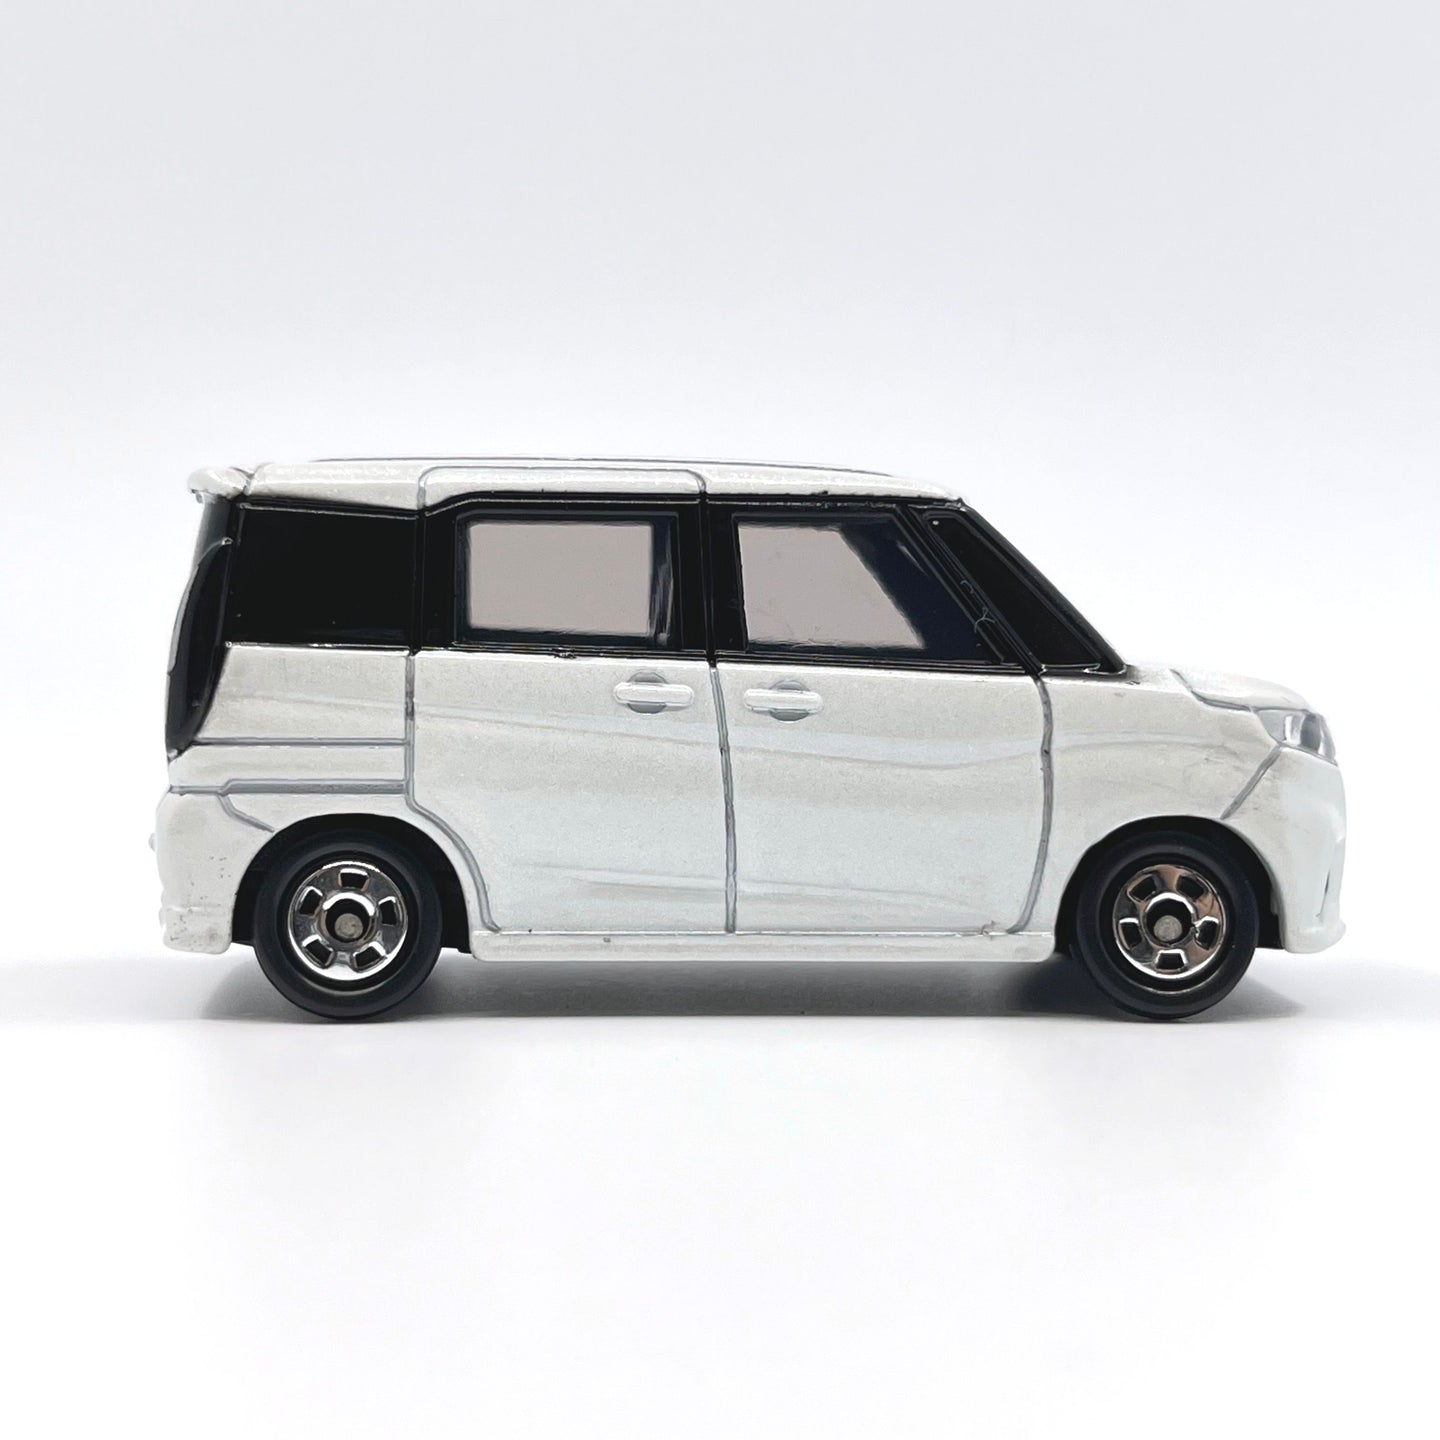 1:60 Suzuki Solio Alloy Tomica Diecast Car Model by Takara Tomy